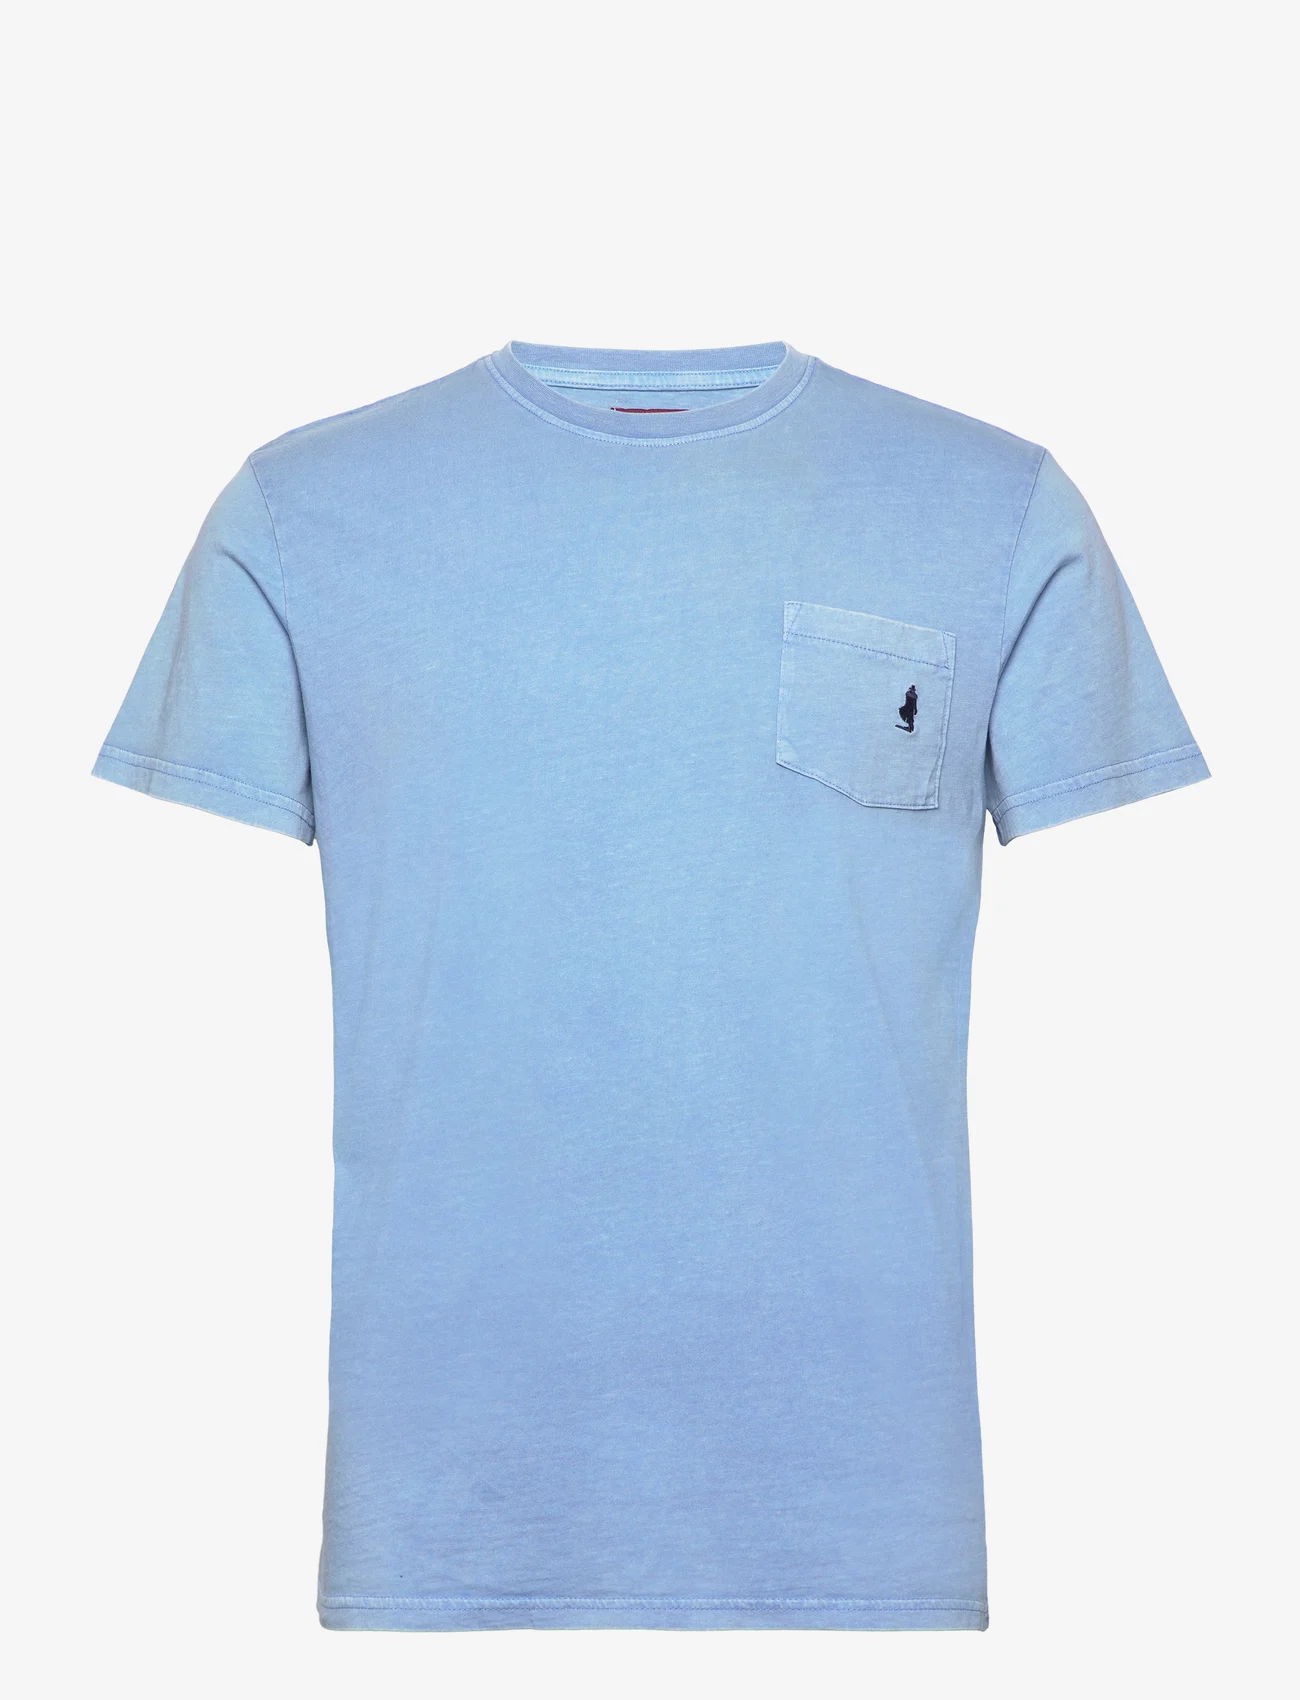 MCS - MCS Tee Laredo Men - podstawowe koszulki - cool blue - 0